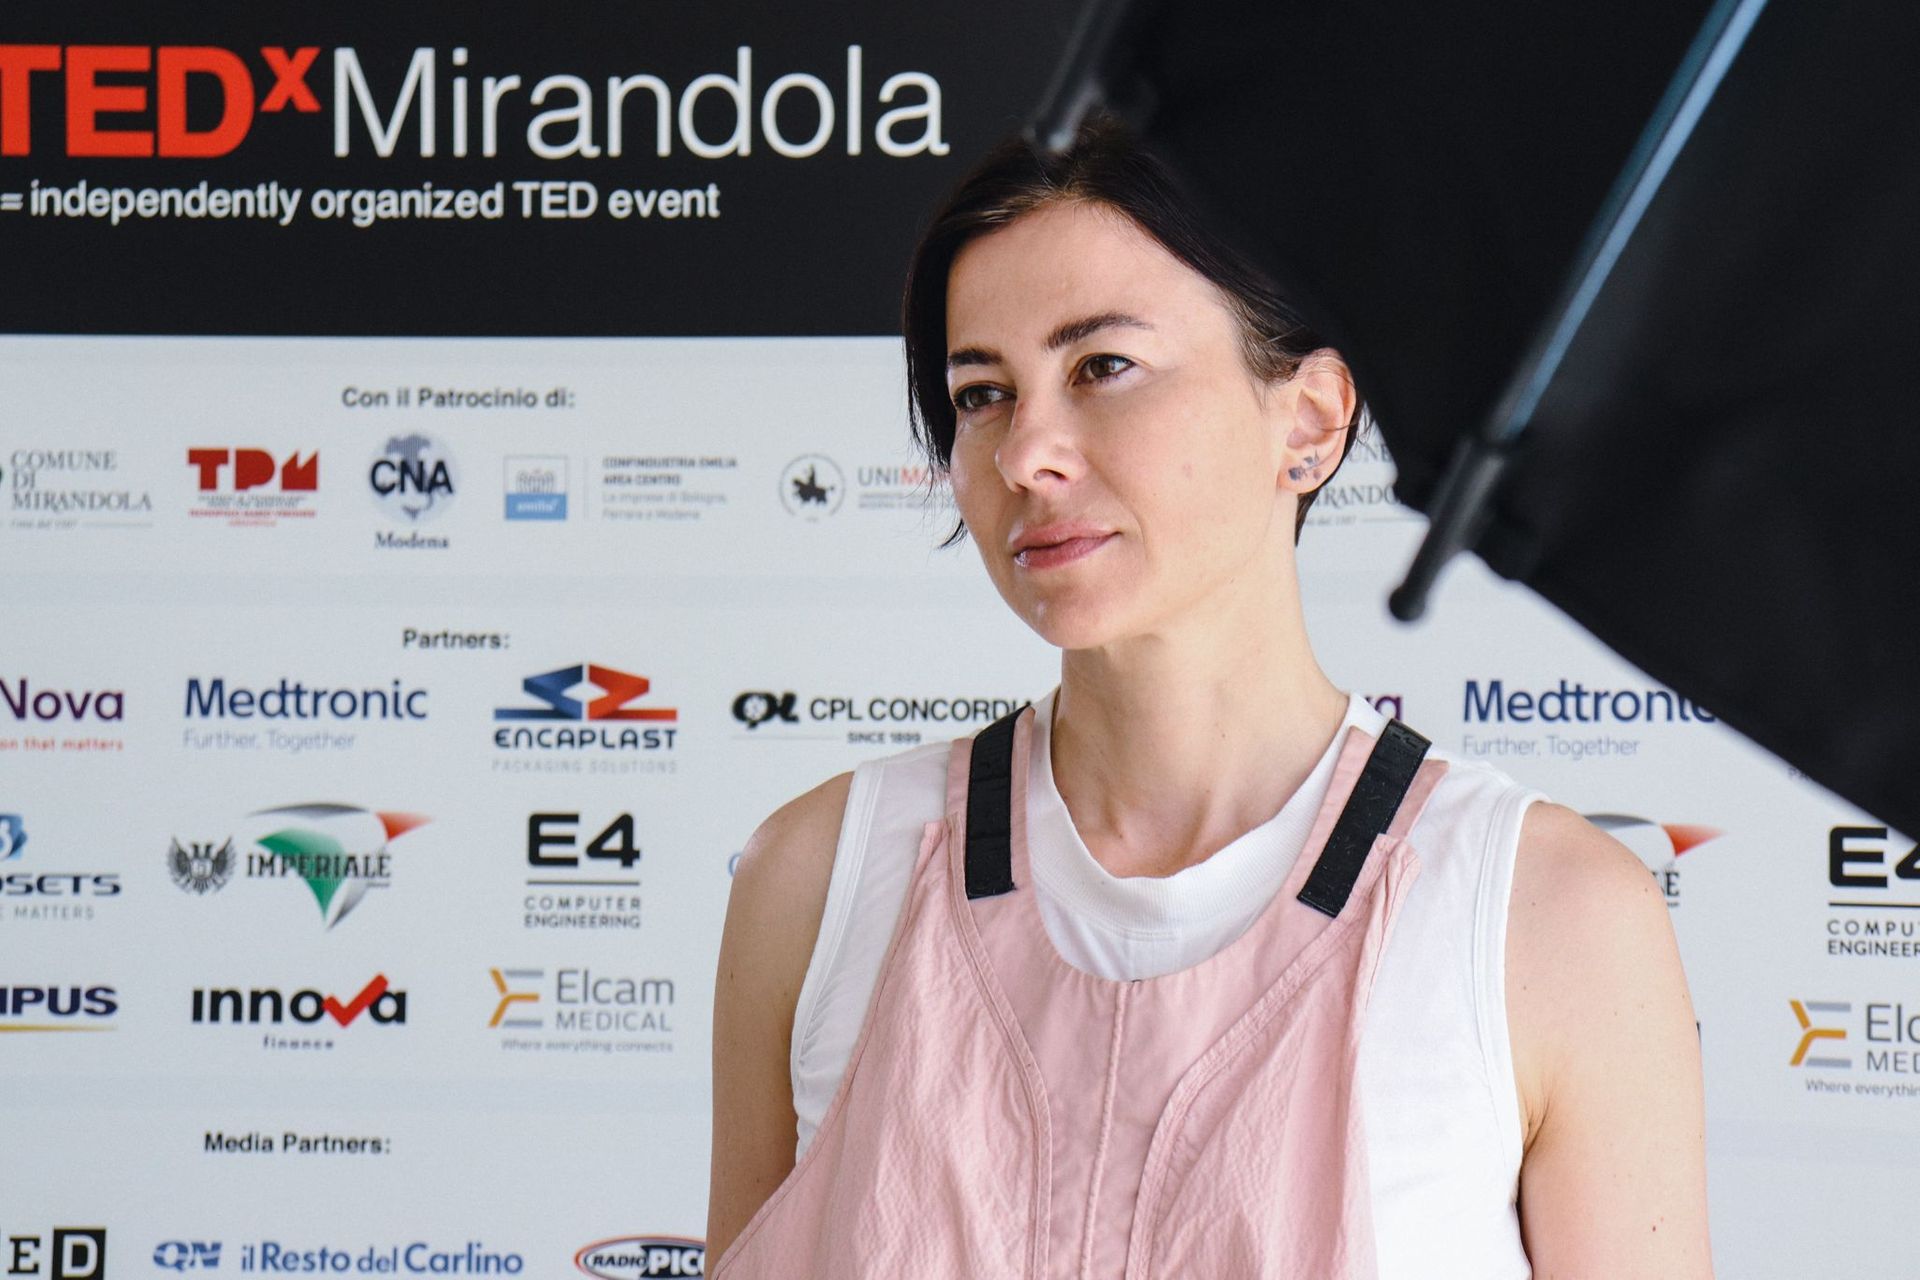 Osnivač Maverx fondacije, Francesca Veronesi je kćerka Maria, pionira biomedicinskog okruga 1962: bila je govornik na prvom izdanju TEDx Mirandola